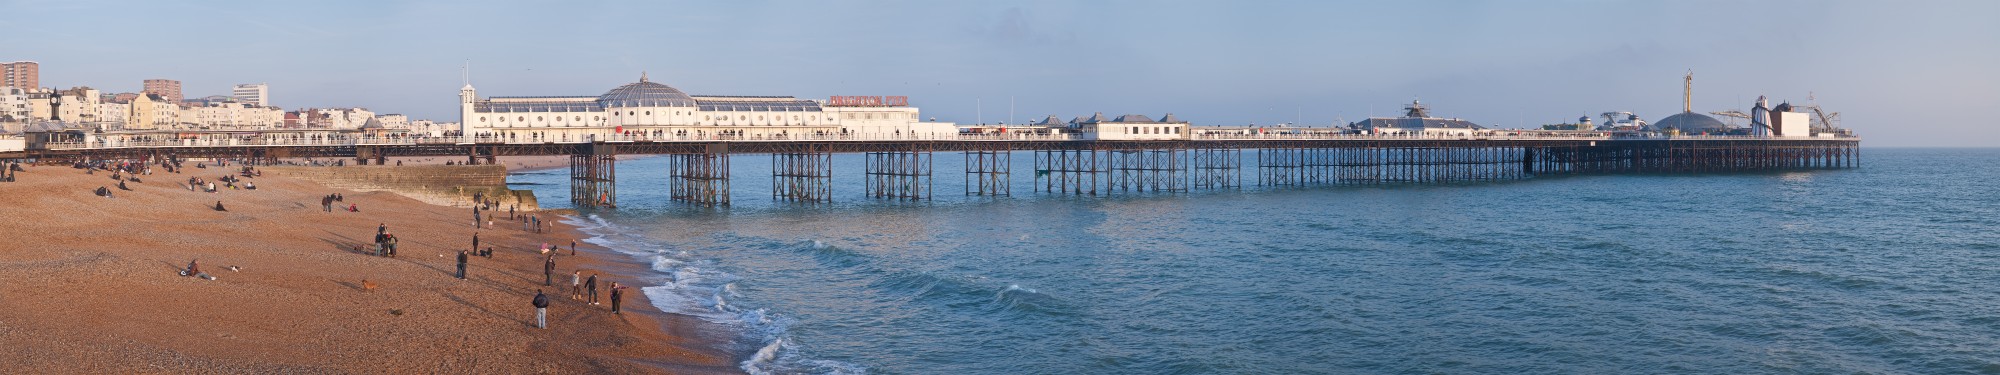 Brighton Pier, England - Feb 2009